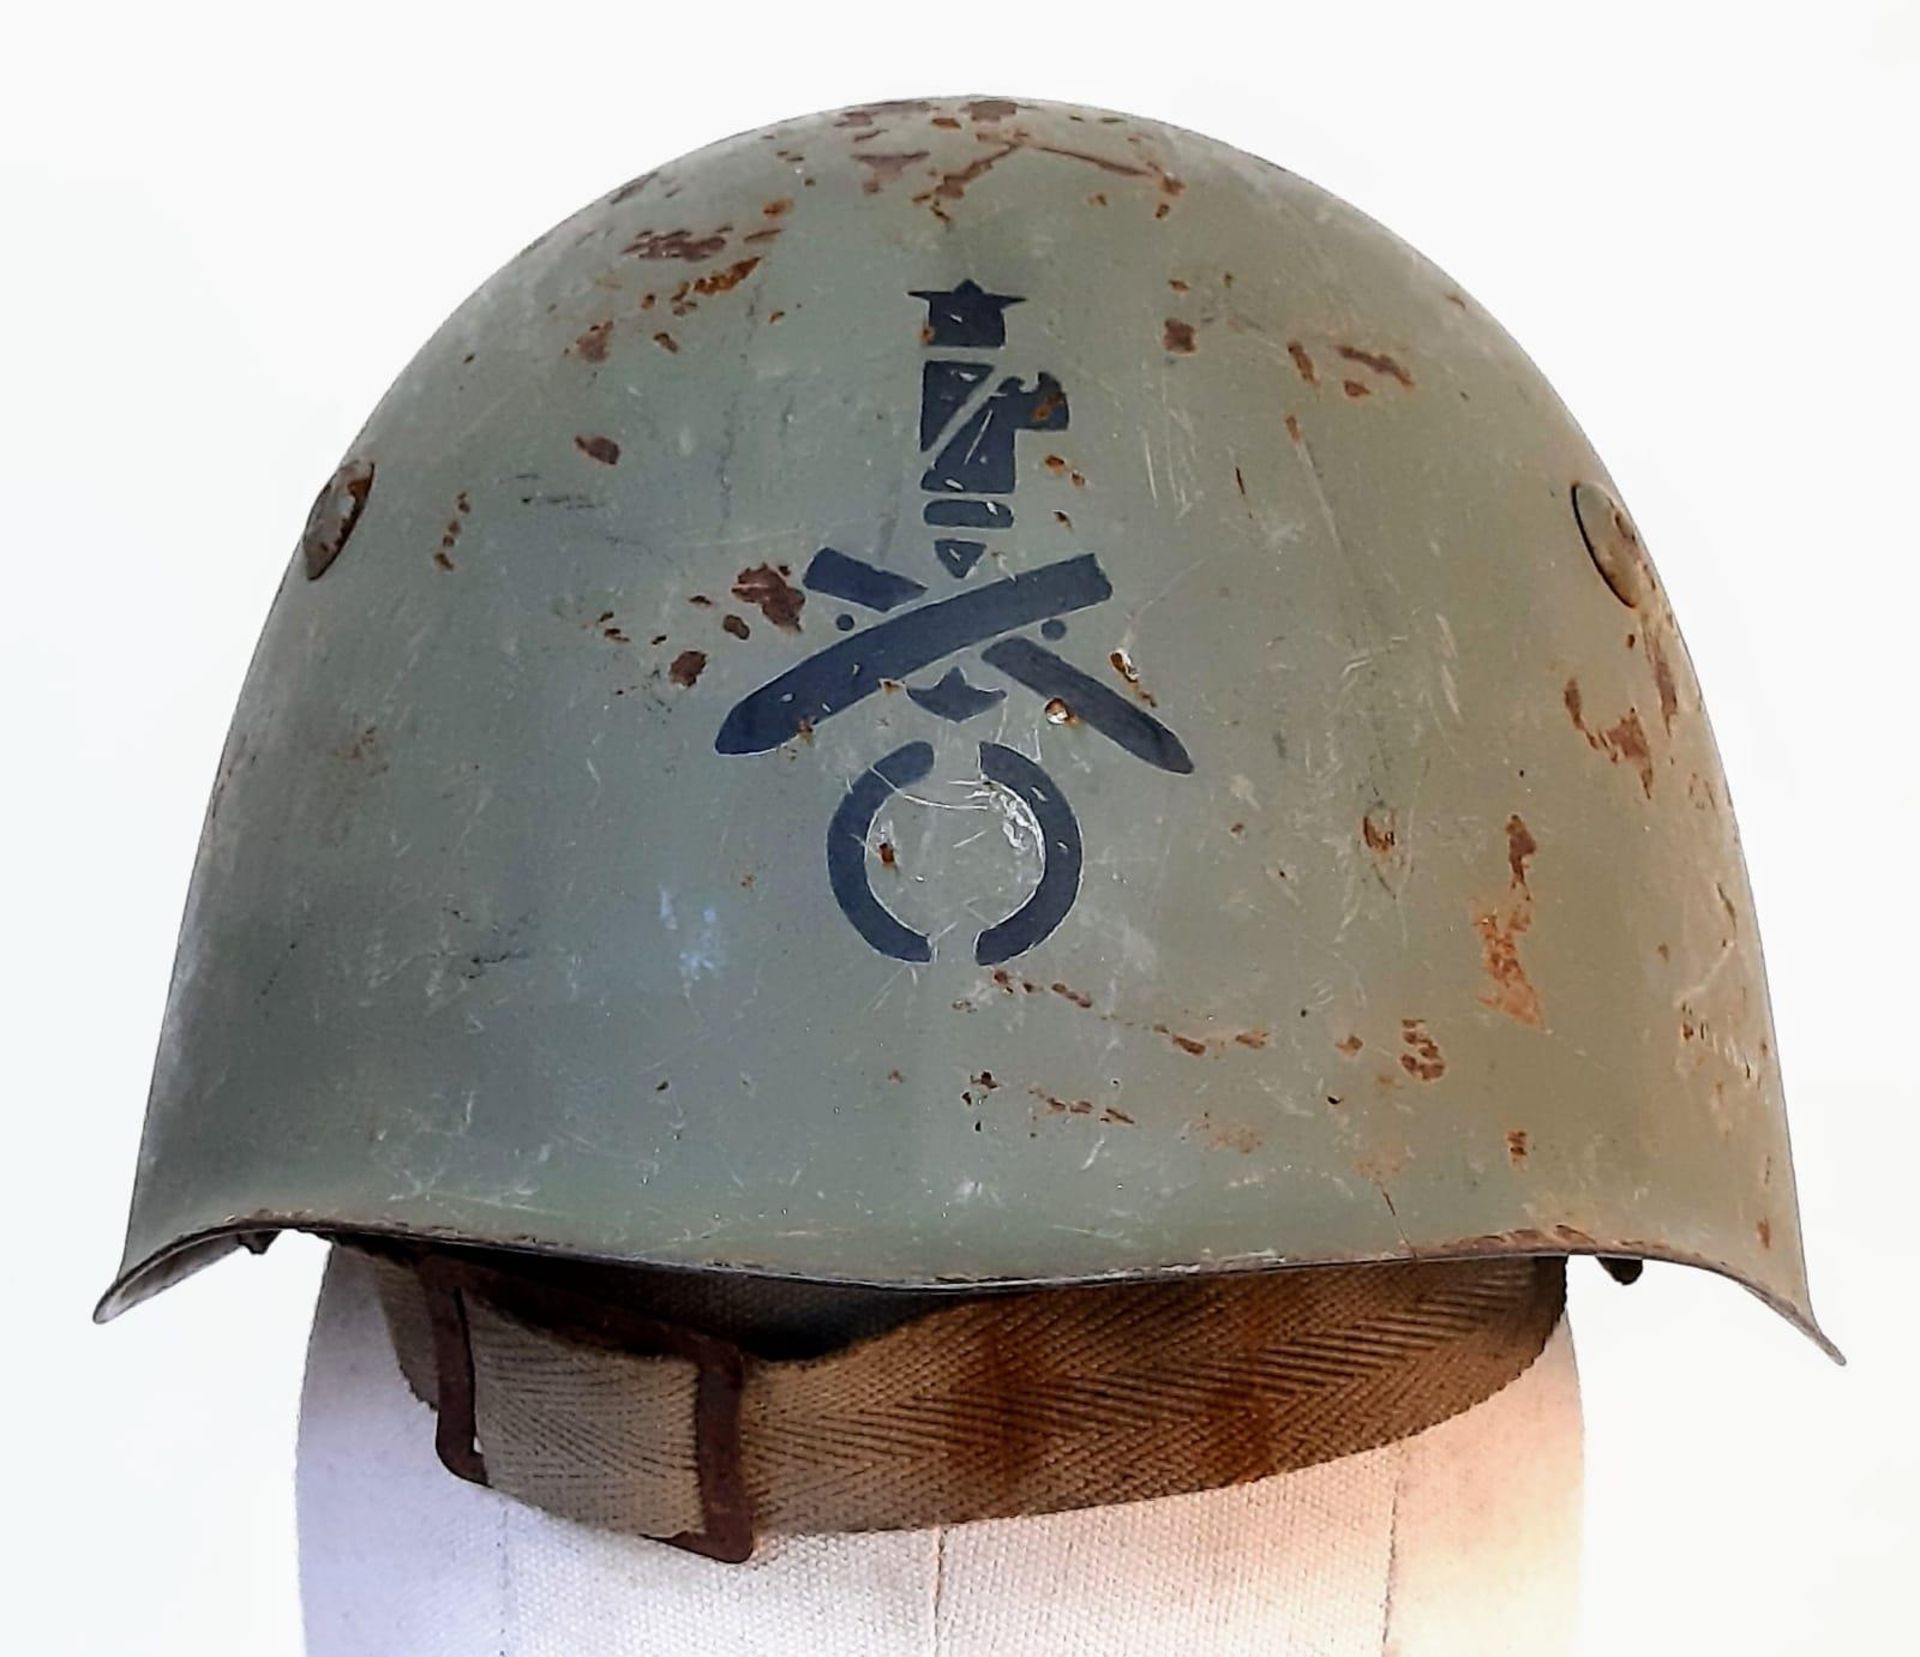 A WW2 Italian M33 Helmet with insignia of the Coastal Artillery.